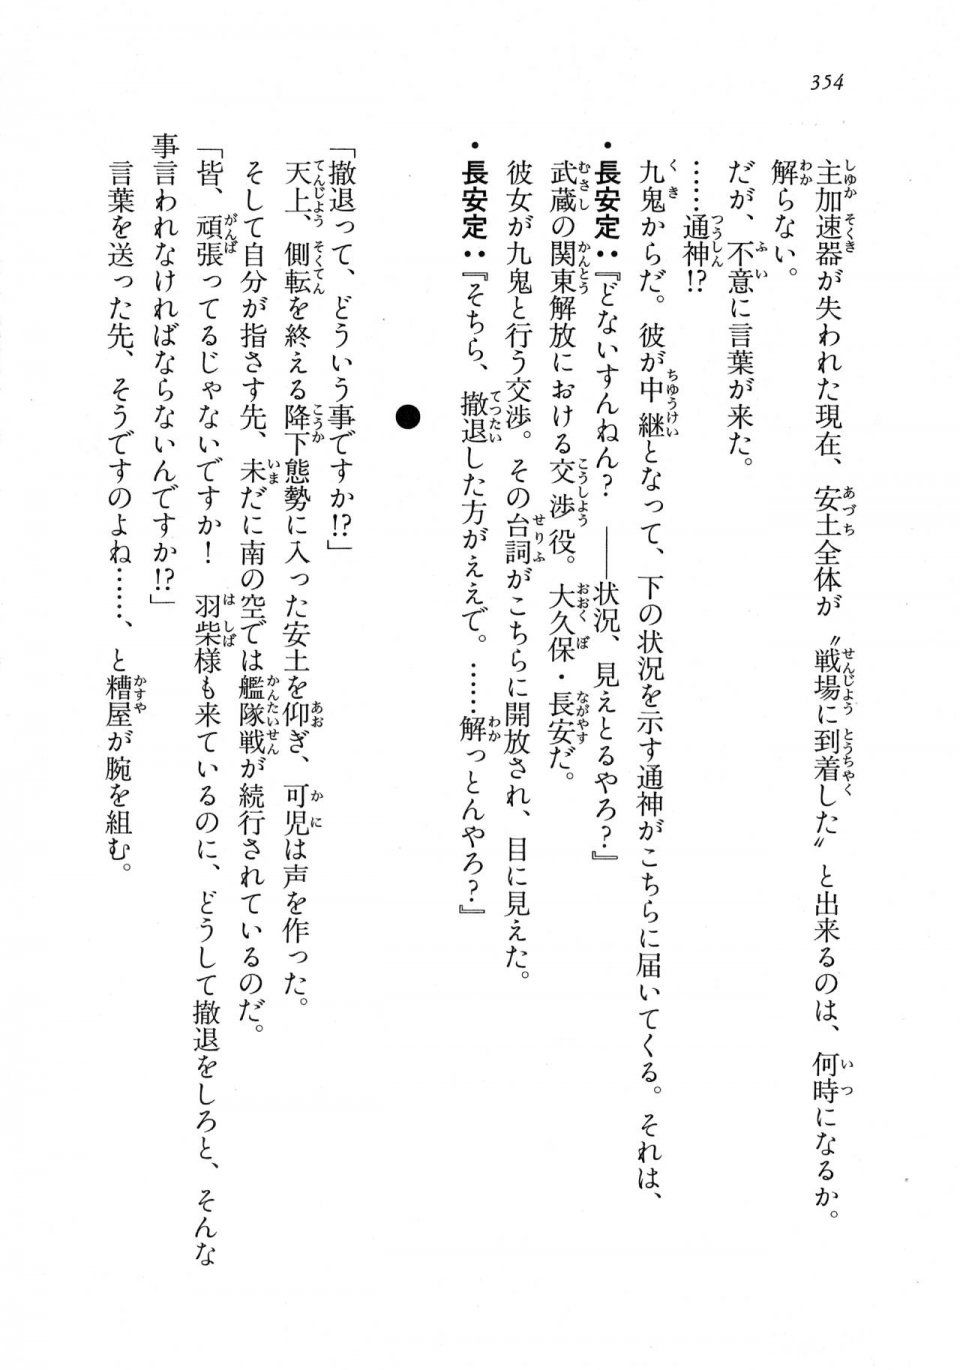 Kyoukai Senjou no Horizon LN Vol 18(7C) Part 1 - Photo #354